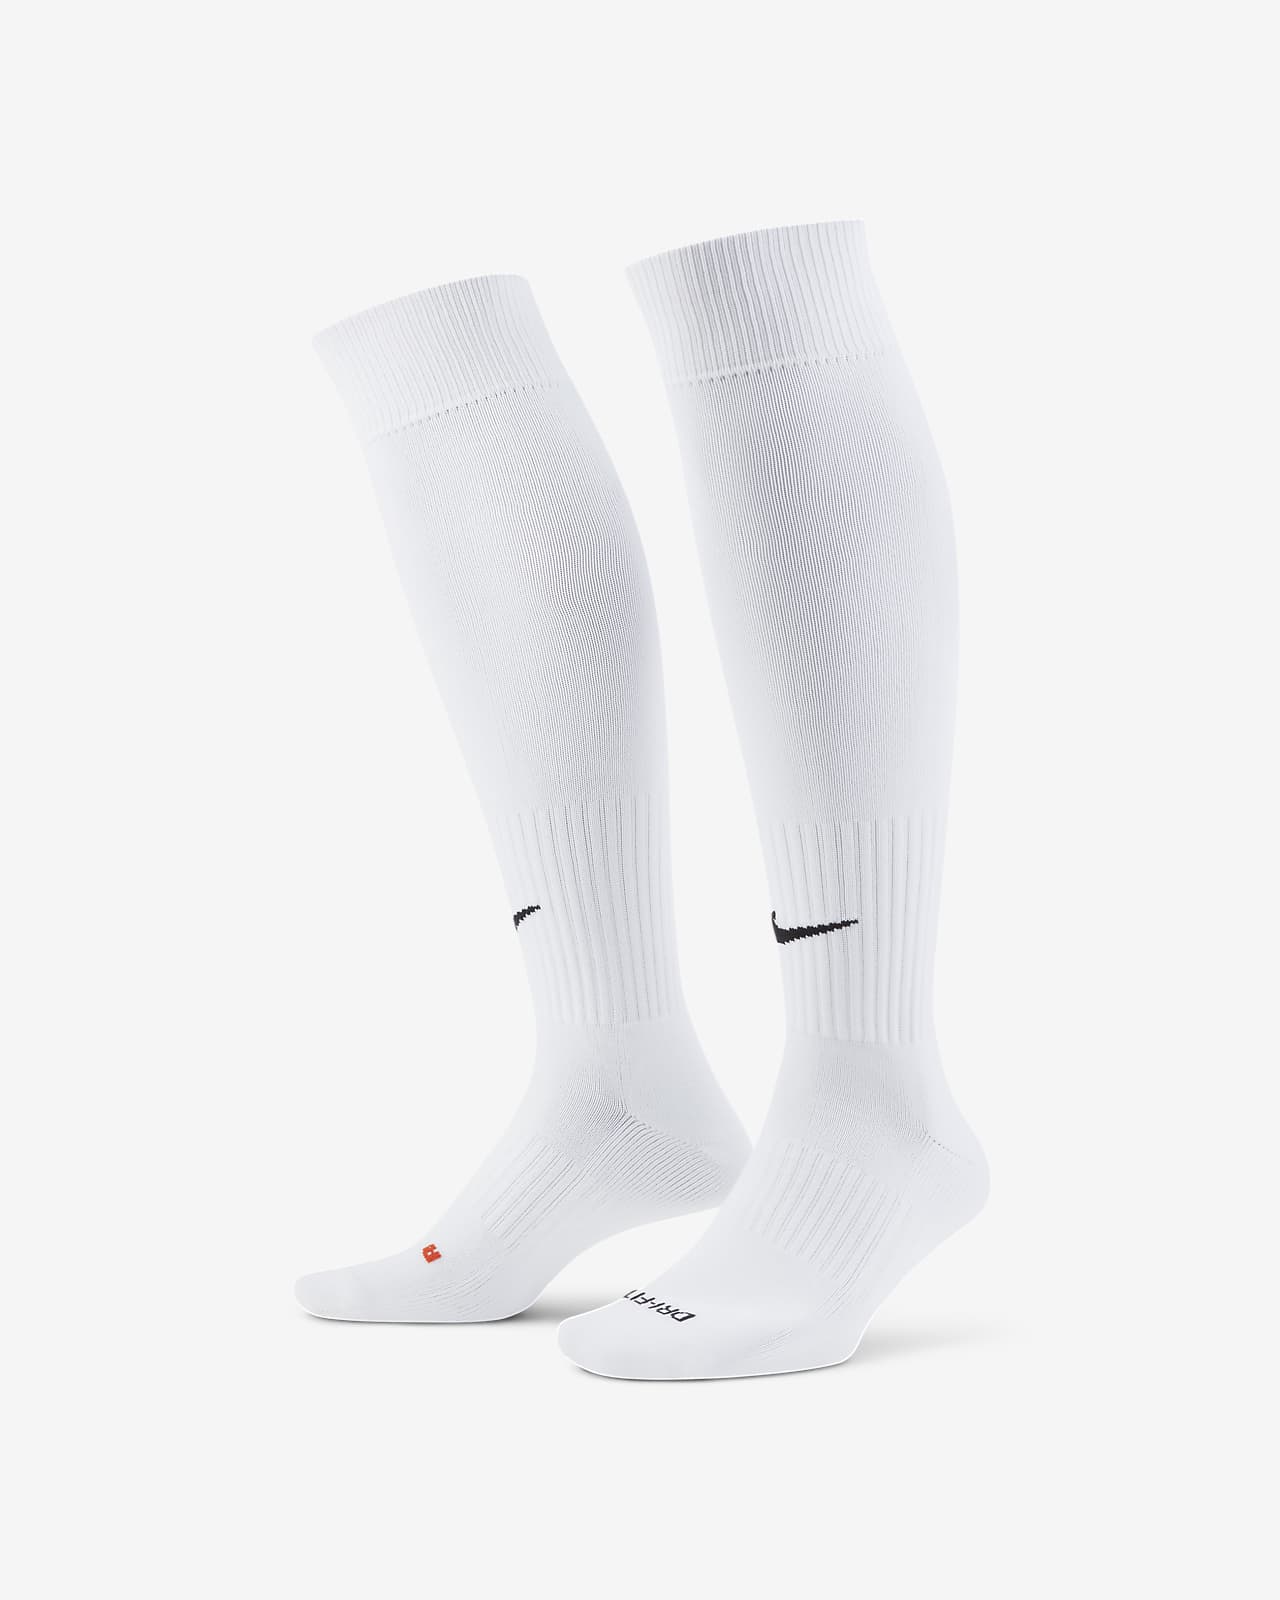 soccer socks nike